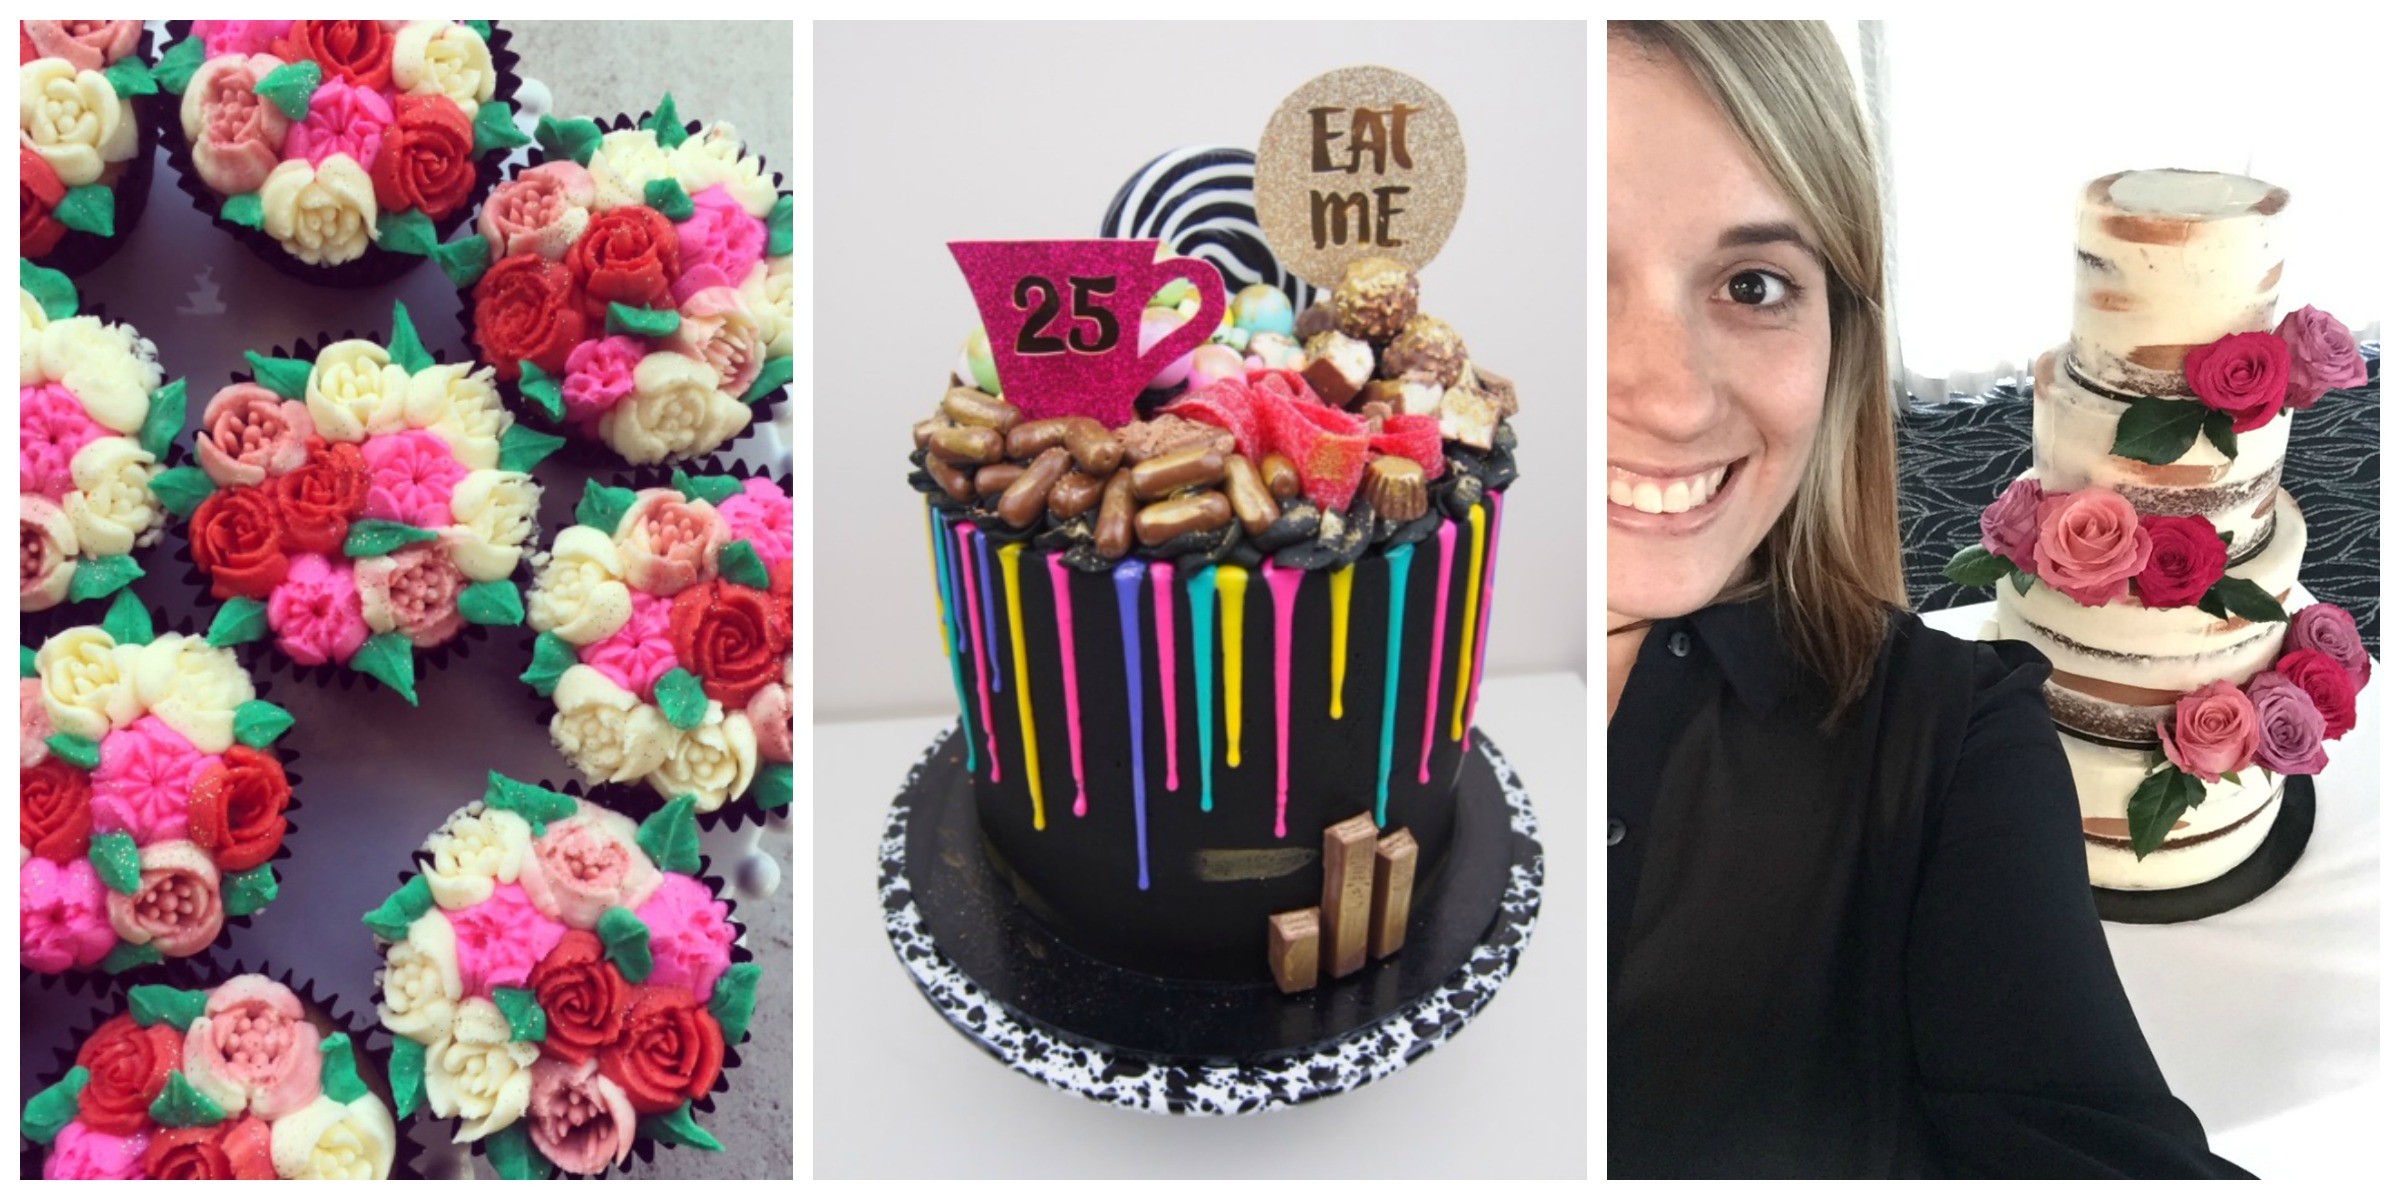 Karlee's Kupcakes: the cake and Instagram queen dominating Brisbane's celebration scene.